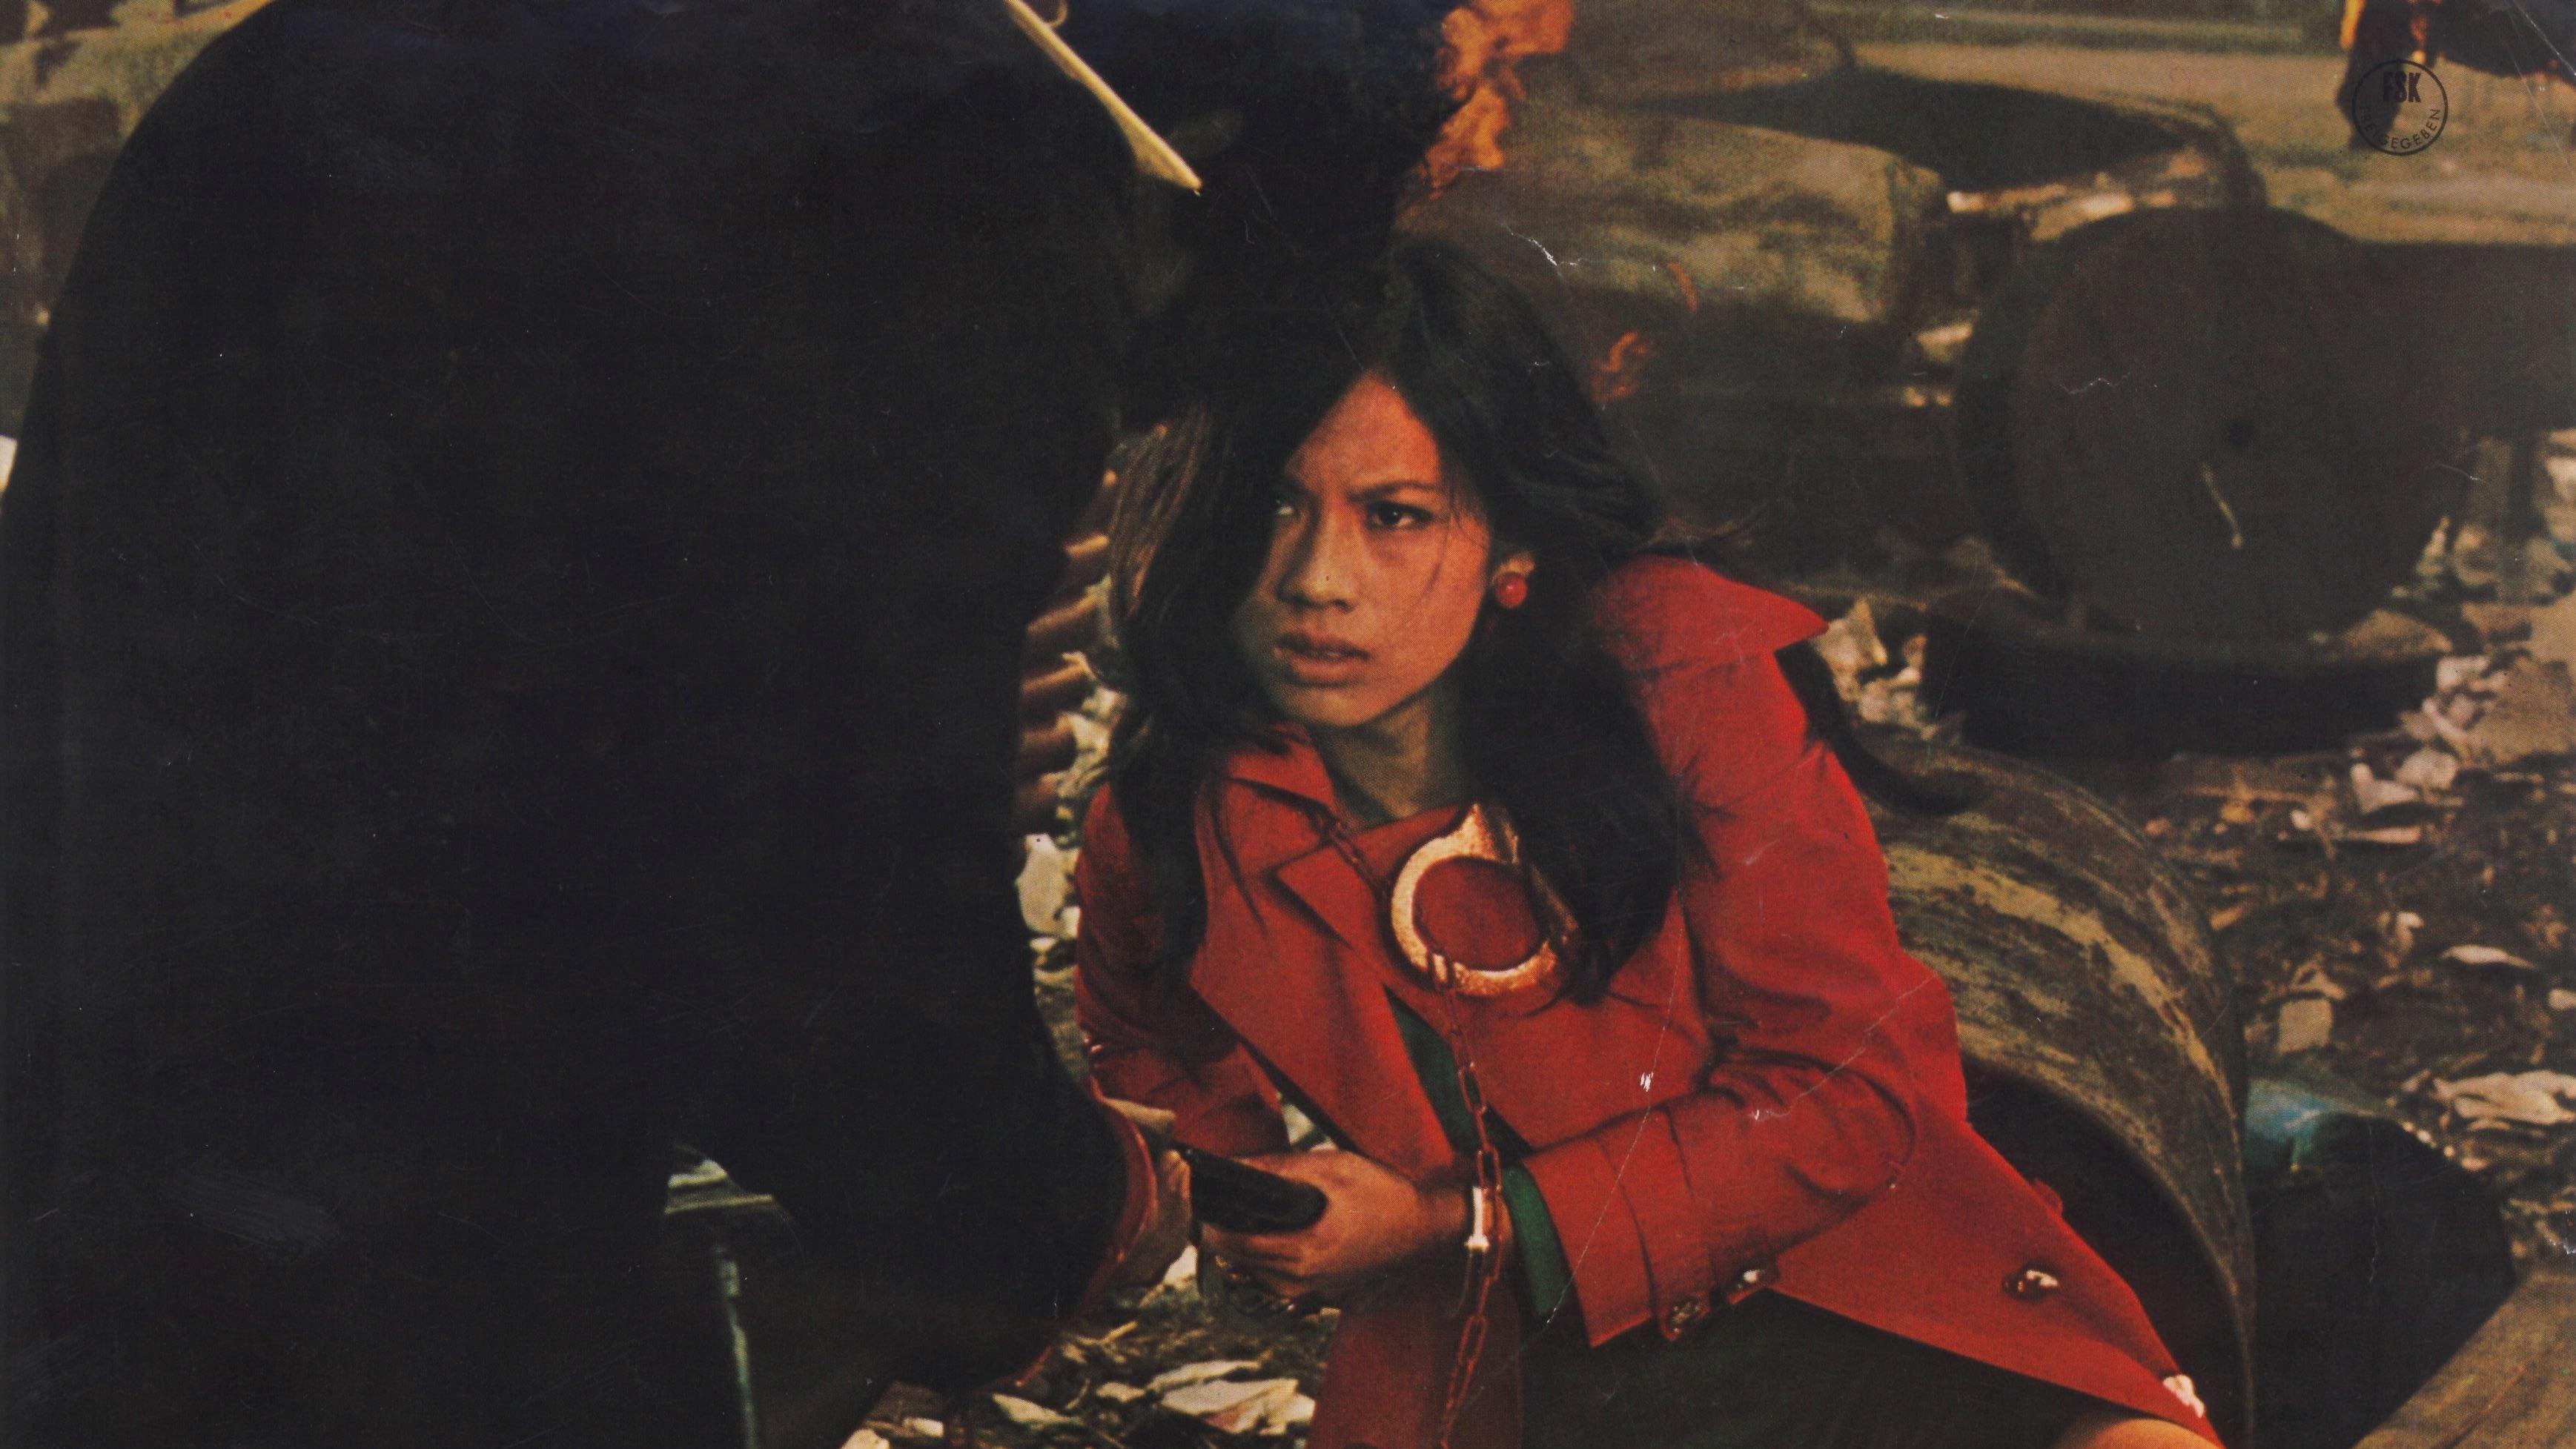 Zero Woman: Red Handcuffs backdrop